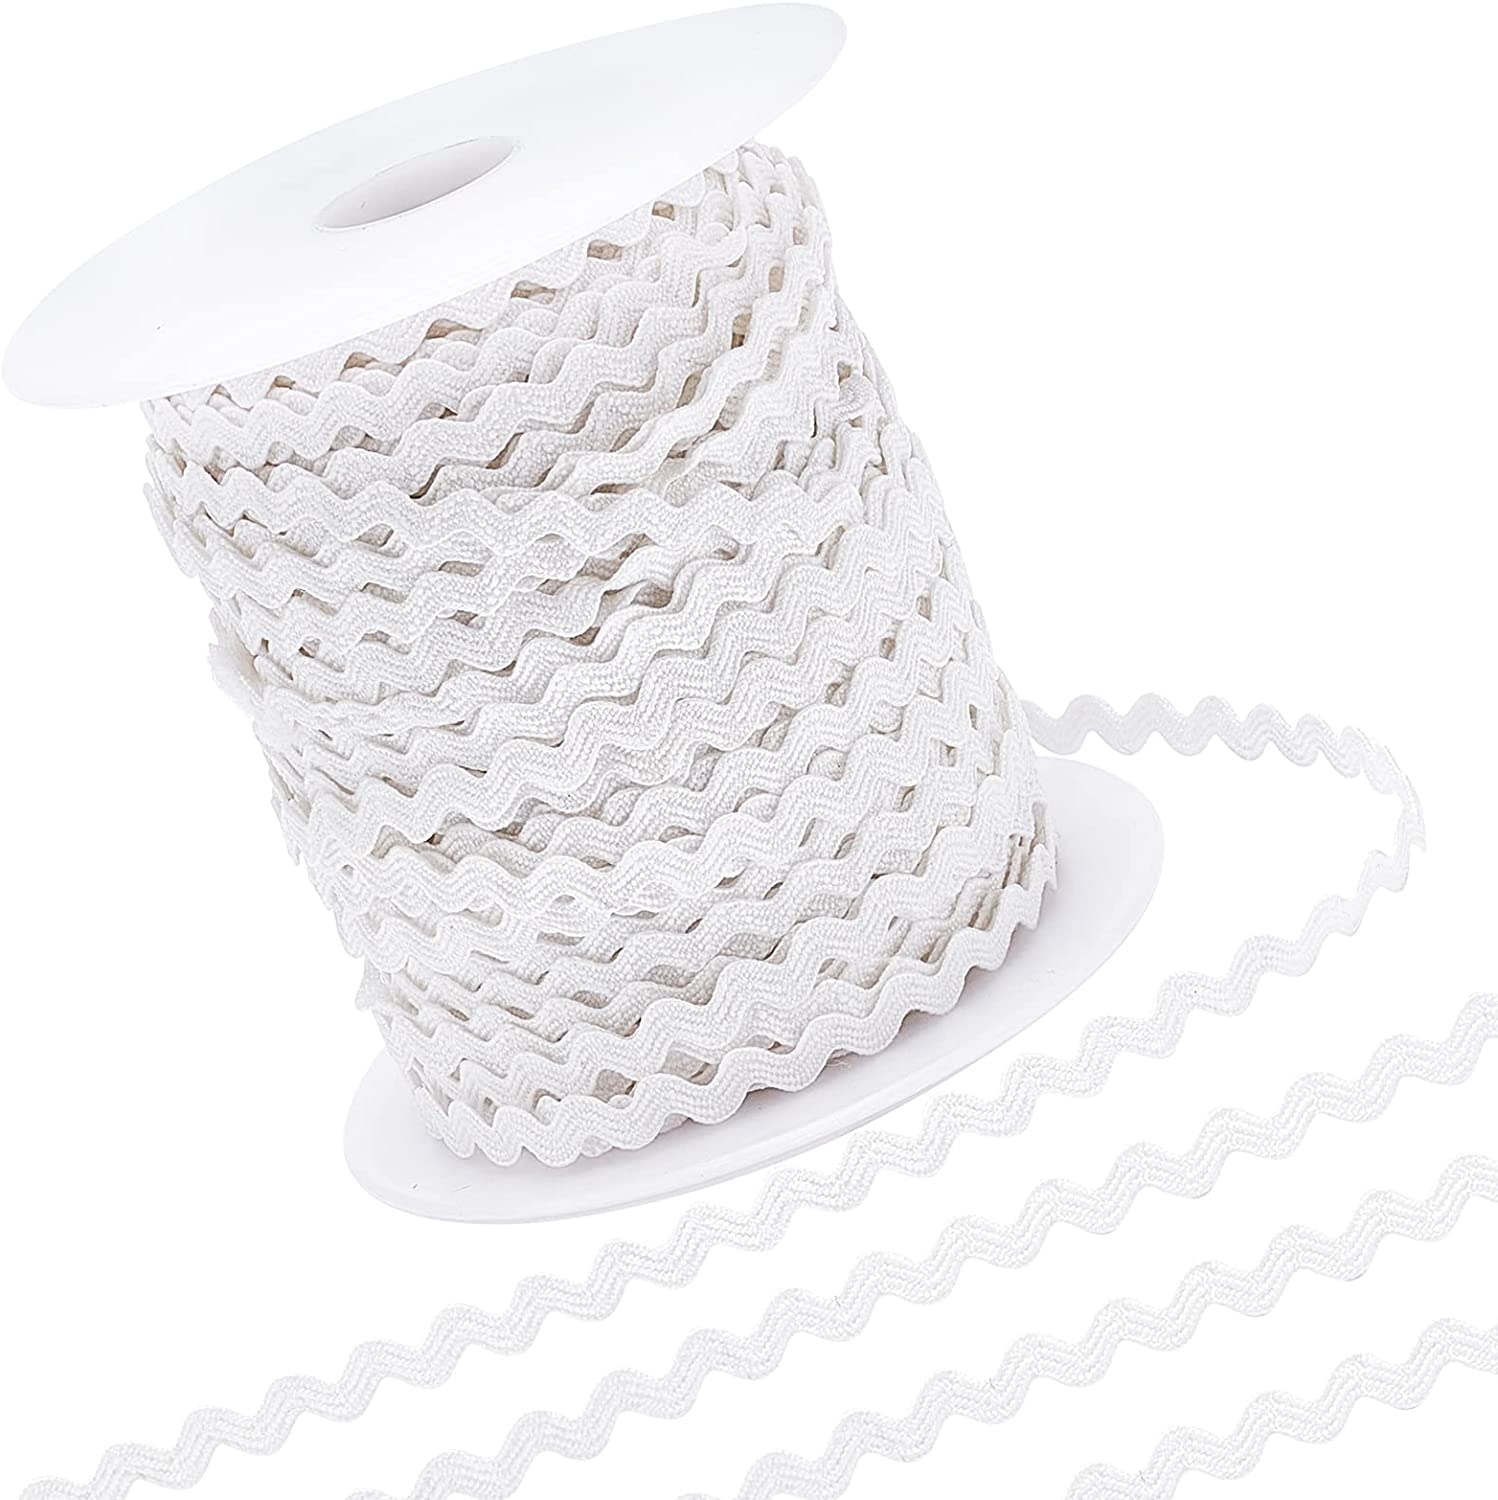 50Yard Rick Rack Trim Ribbon Wave Sewing Bending Fringe Trim 3.5mm for Sewing Flower Making Wedding Party Lace Ribbon Craft (White)